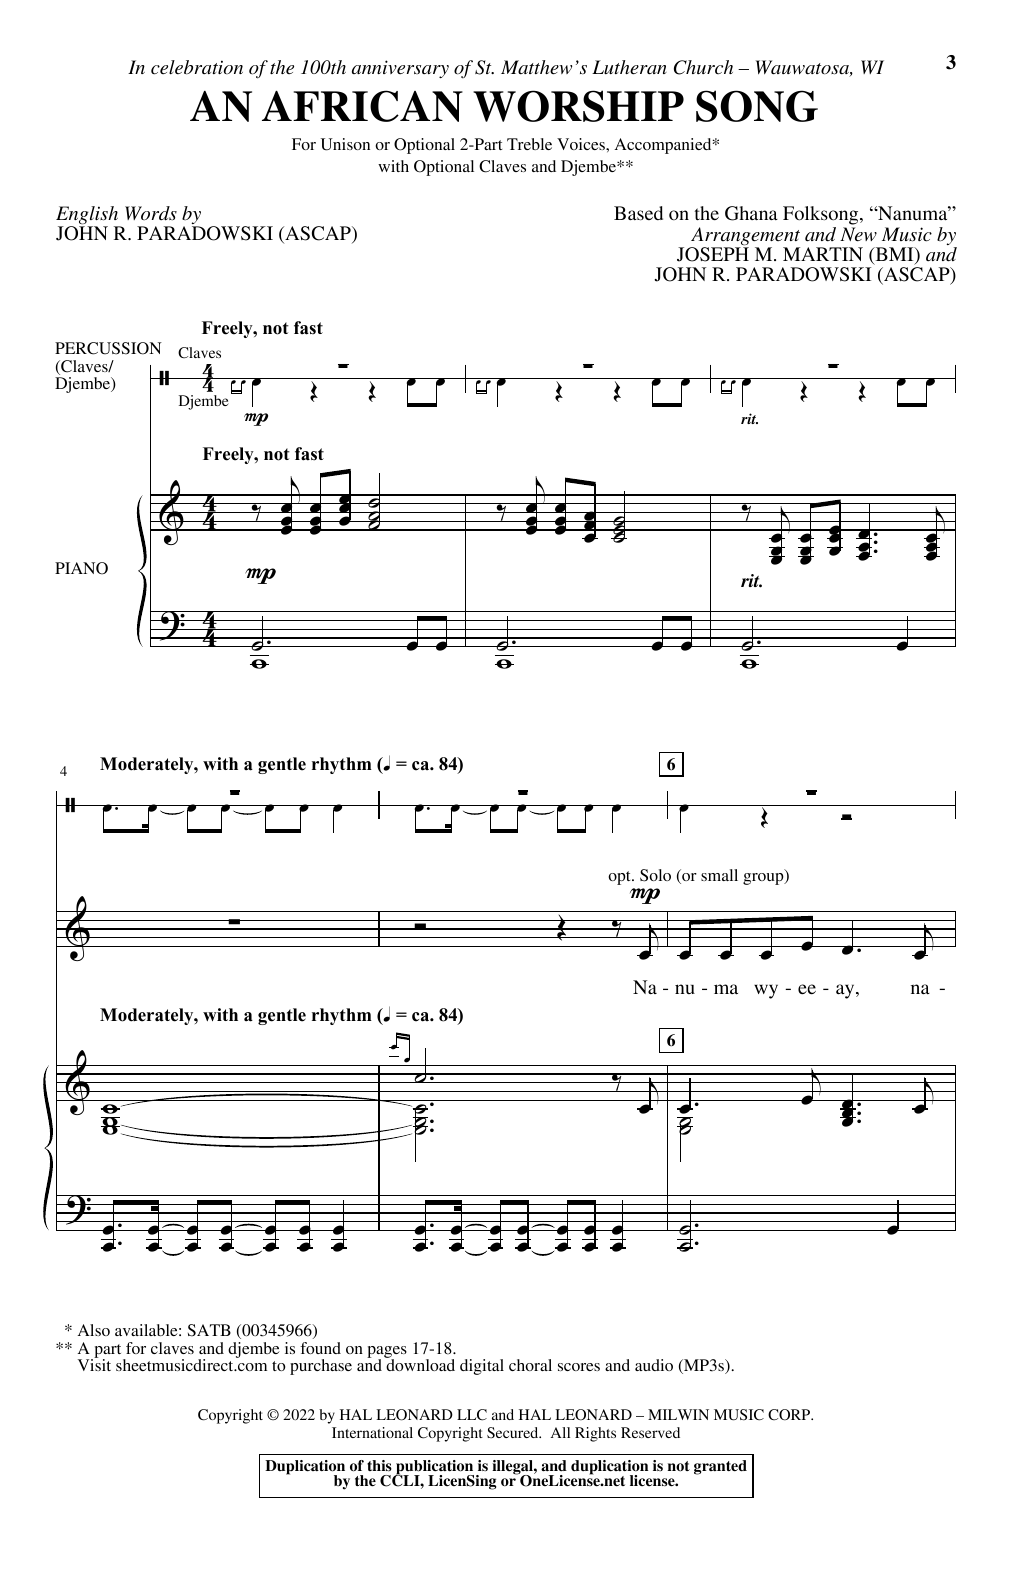 Joseph M. Martin and John R. Paradowski An African Worship Song Sheet Music Notes & Chords for SATB Choir - Download or Print PDF